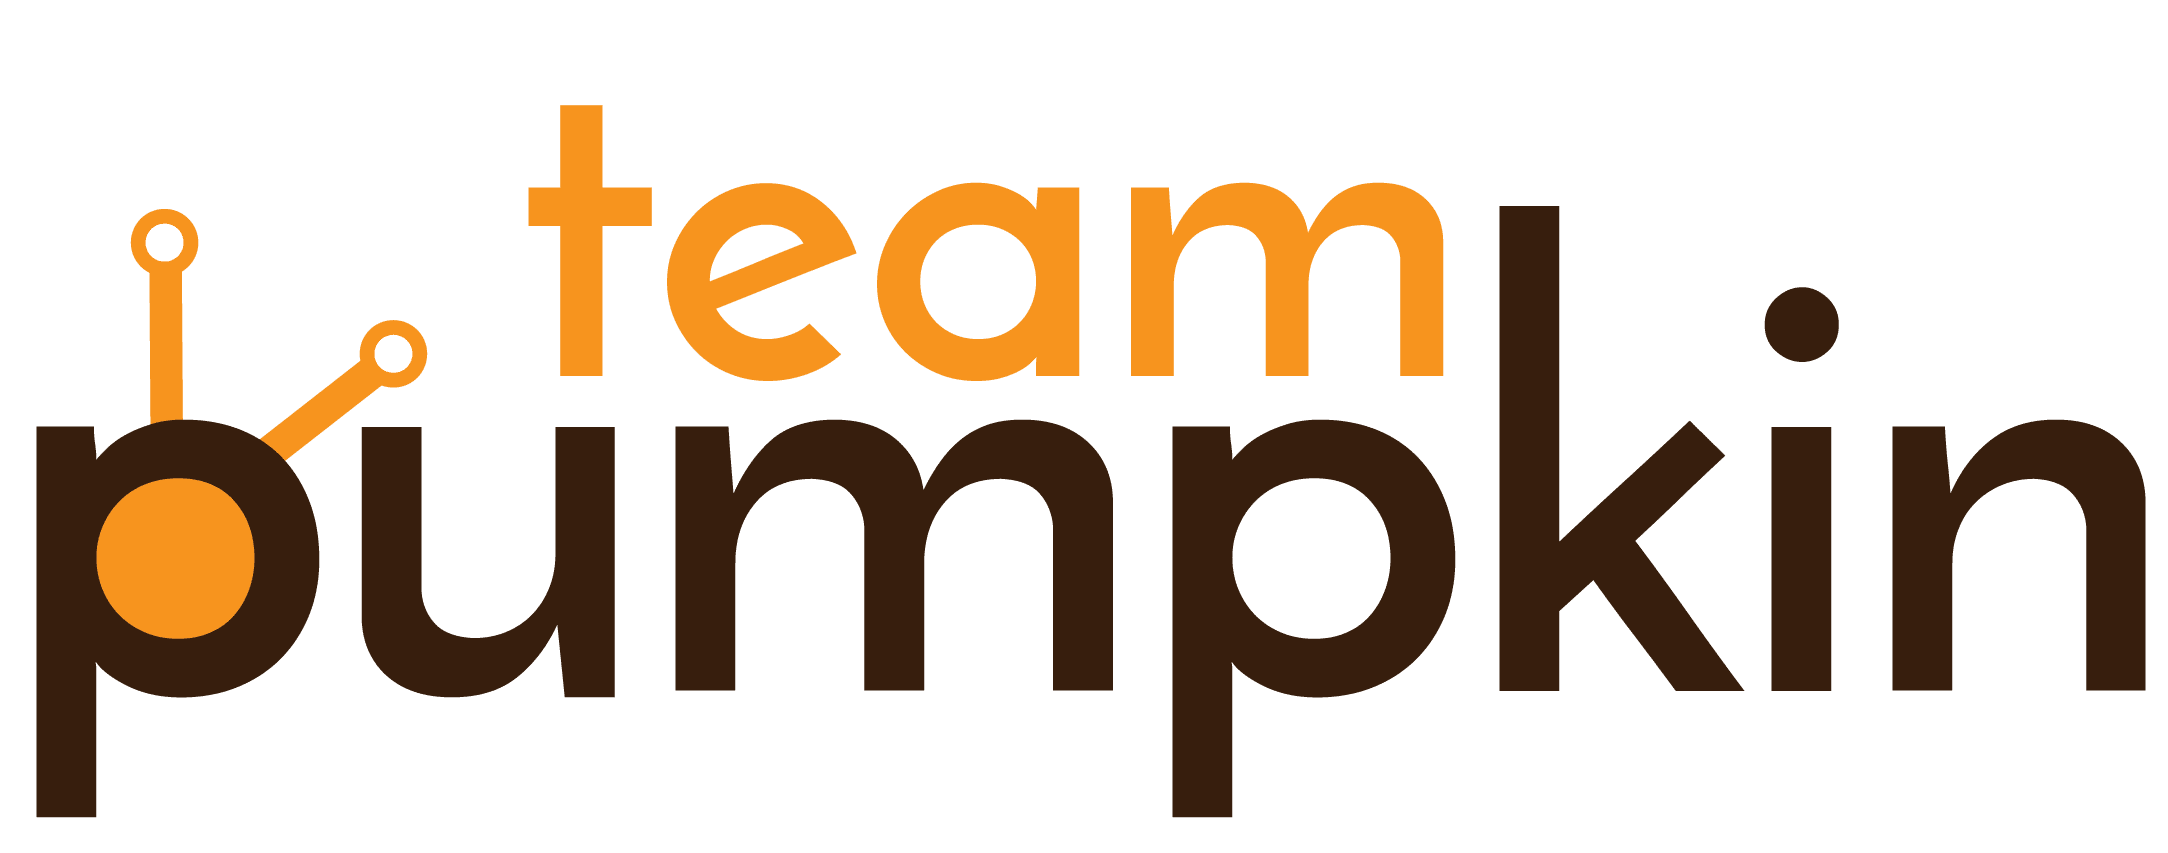 Pumpkin Logo - Top Digital Marketing Agency | Digital Marketing Company | Digital ...